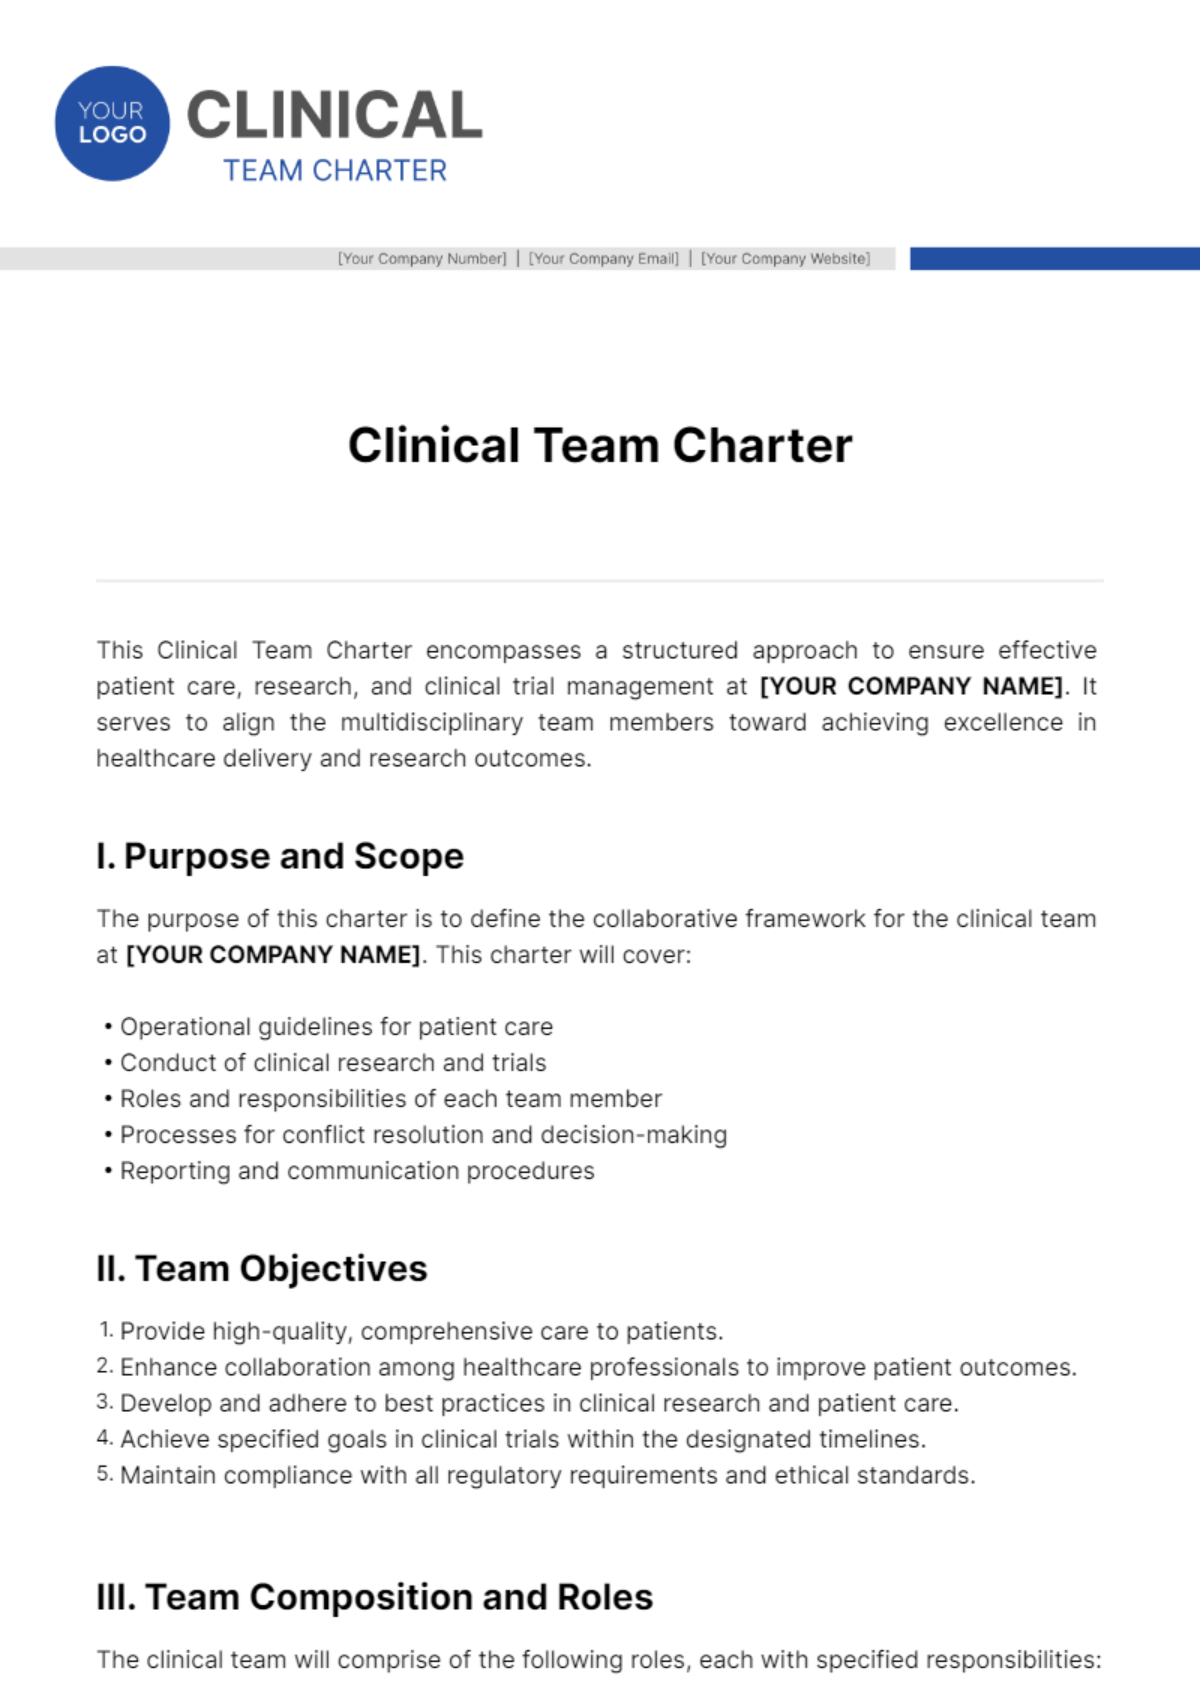 Clinical Team Charter Template